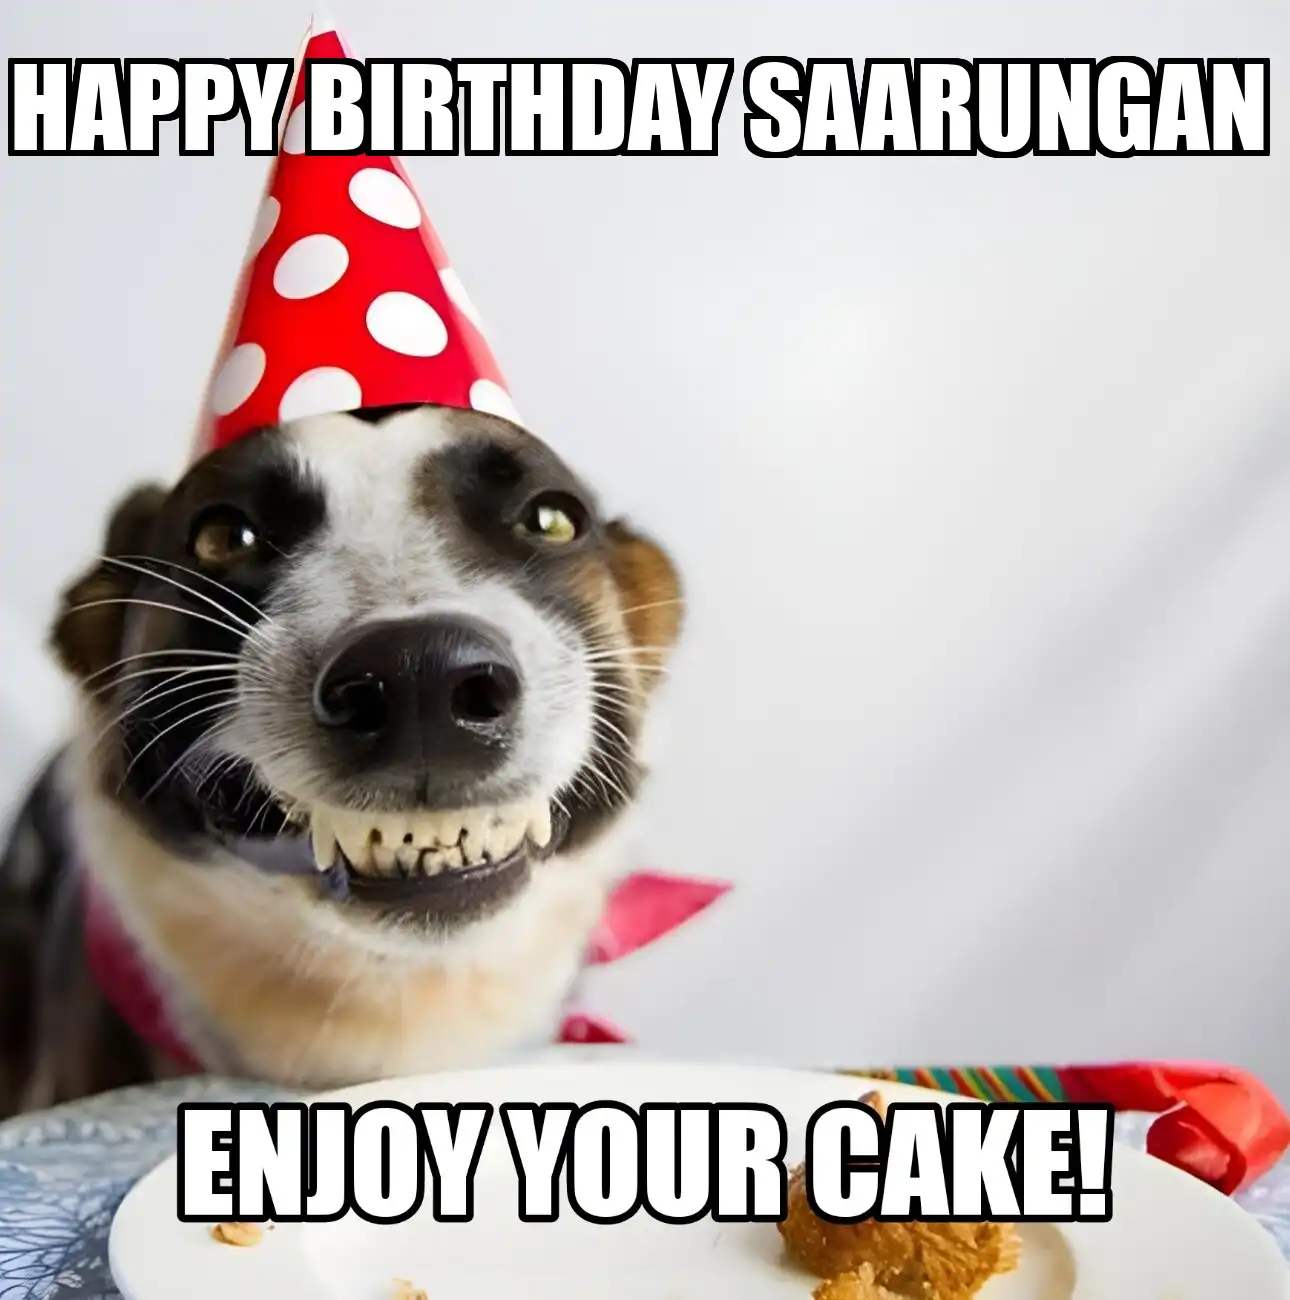 Happy Birthday Saarungan Enjoy Your Cake Dog Meme